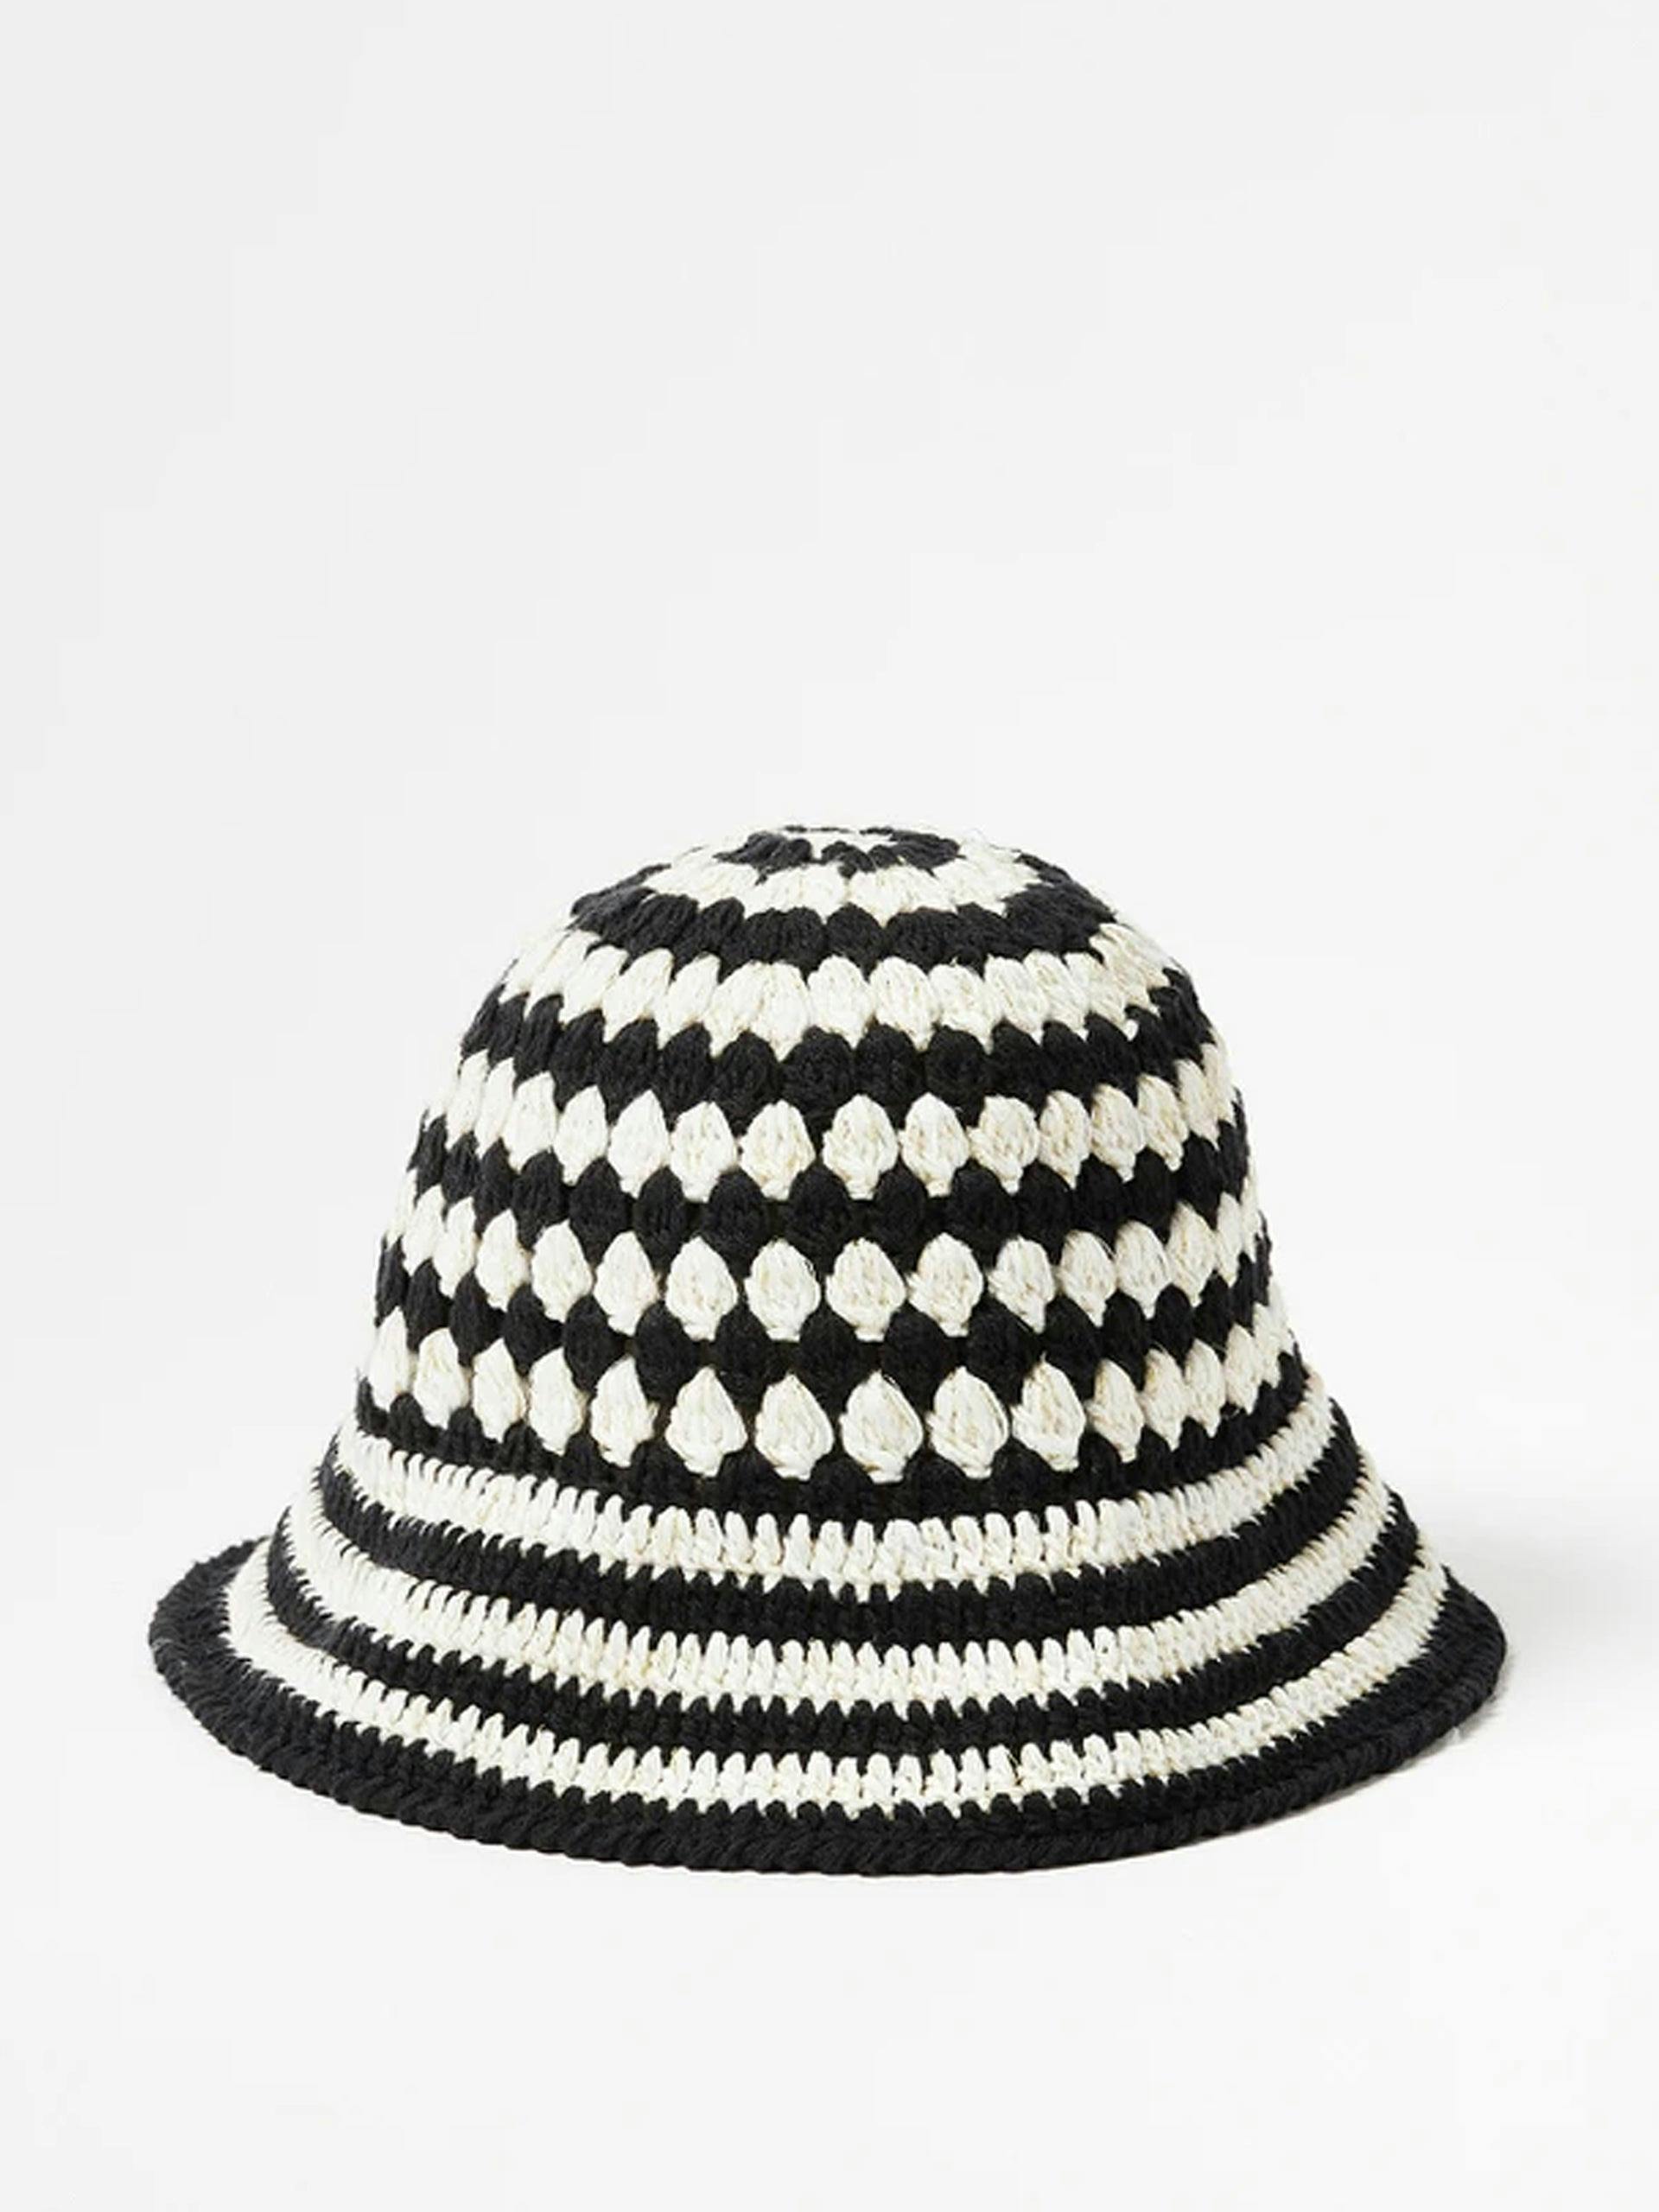 Black and white crochet bucket hat